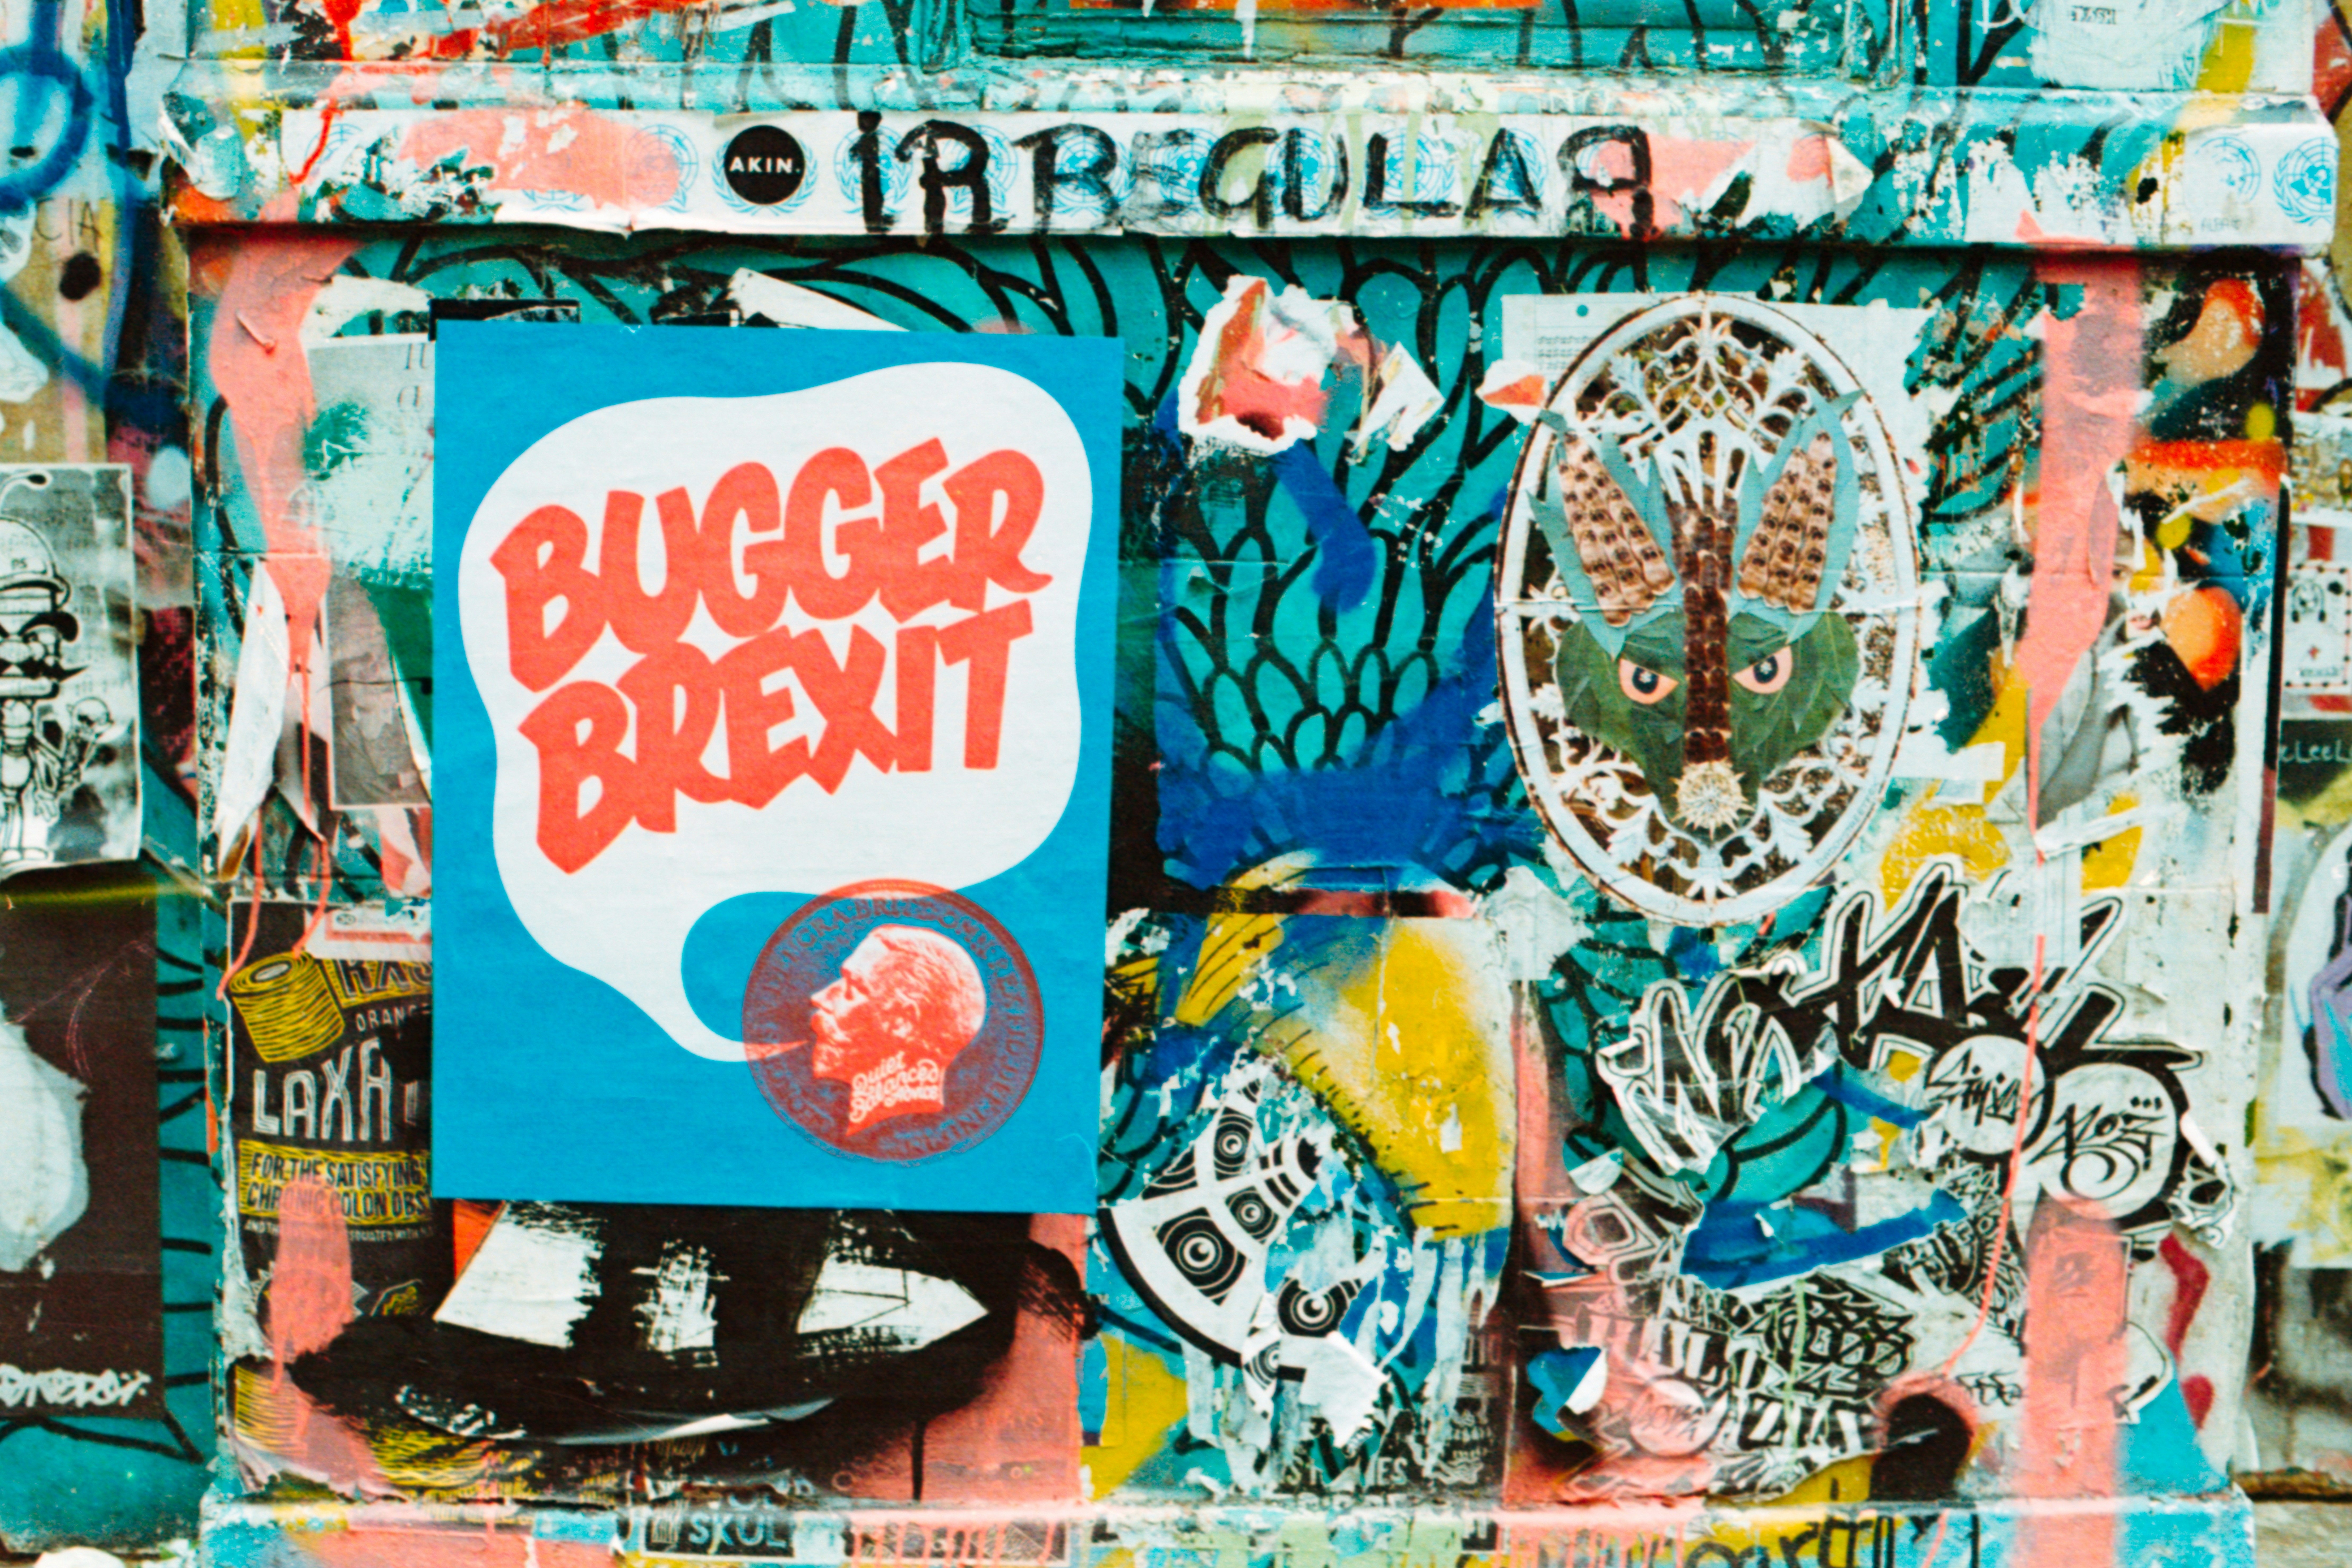 Image: Bugger Brexit. London Street art Shoreditch Photo by Annie Spratt on Unsplash